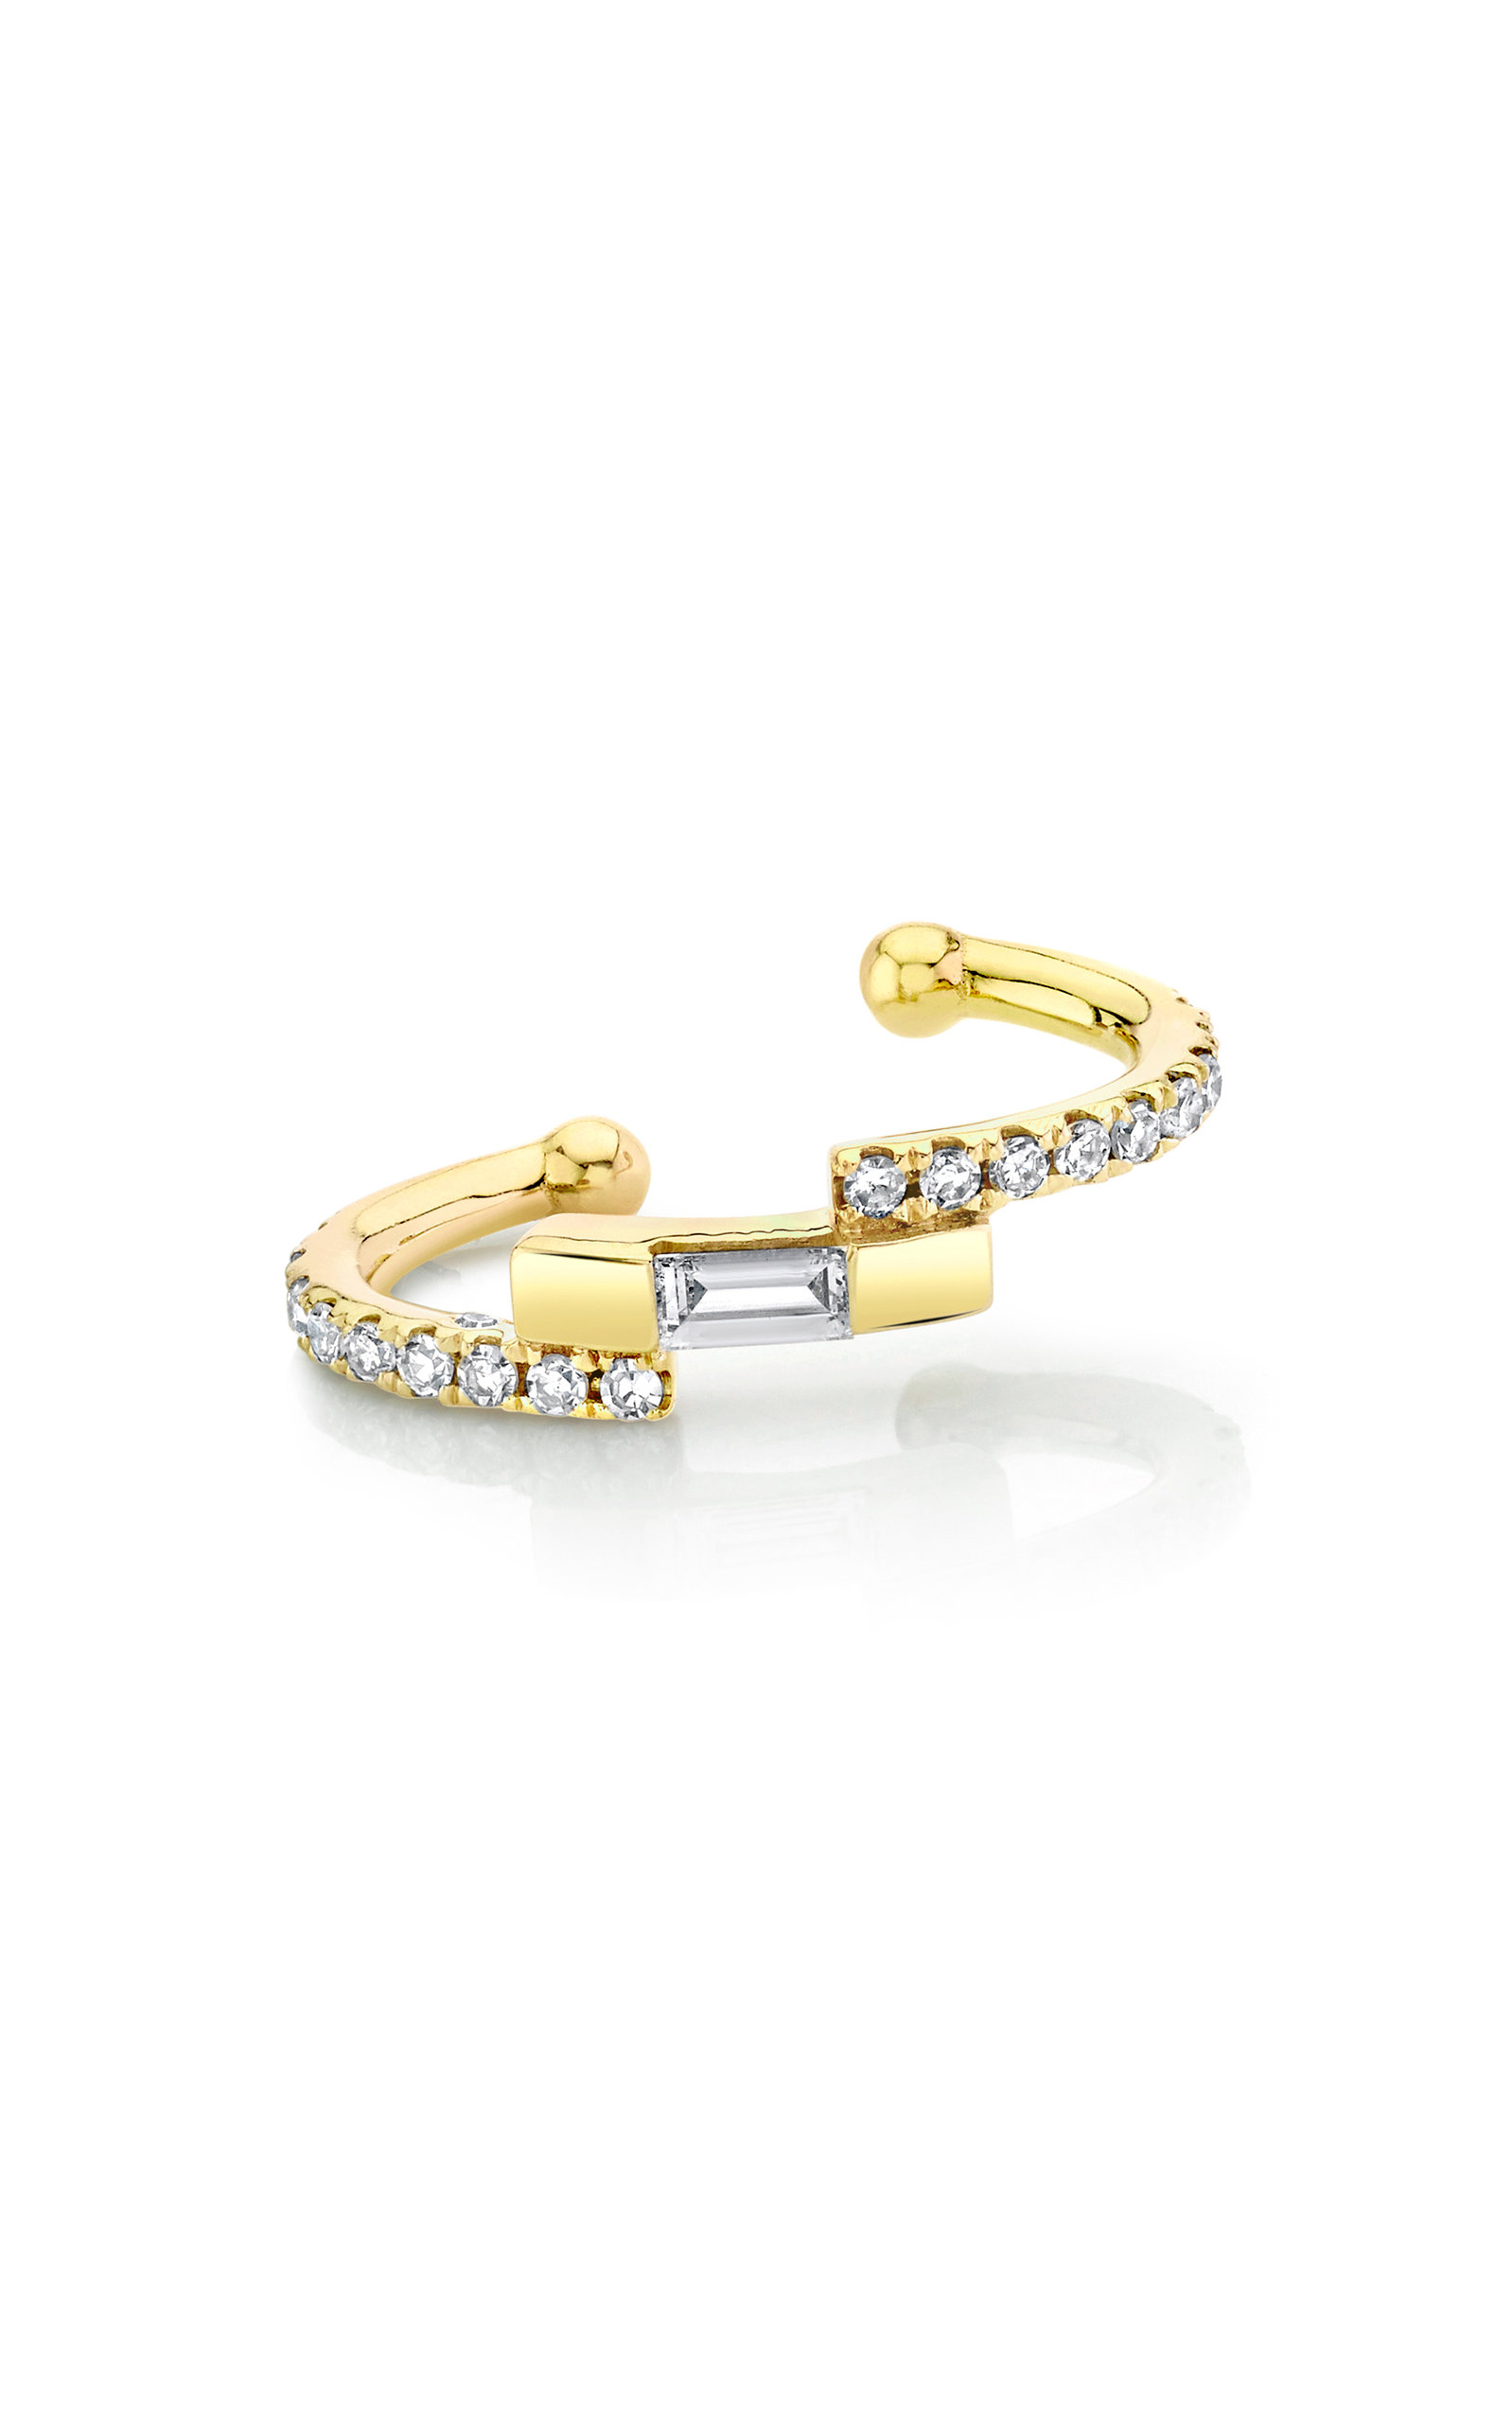 SHAY - Women's 18k Yellow Gold Single Diamond Lightning Bold Slice Ear Cuff - Gold - Only At Moda Operandi - Gifts For Her